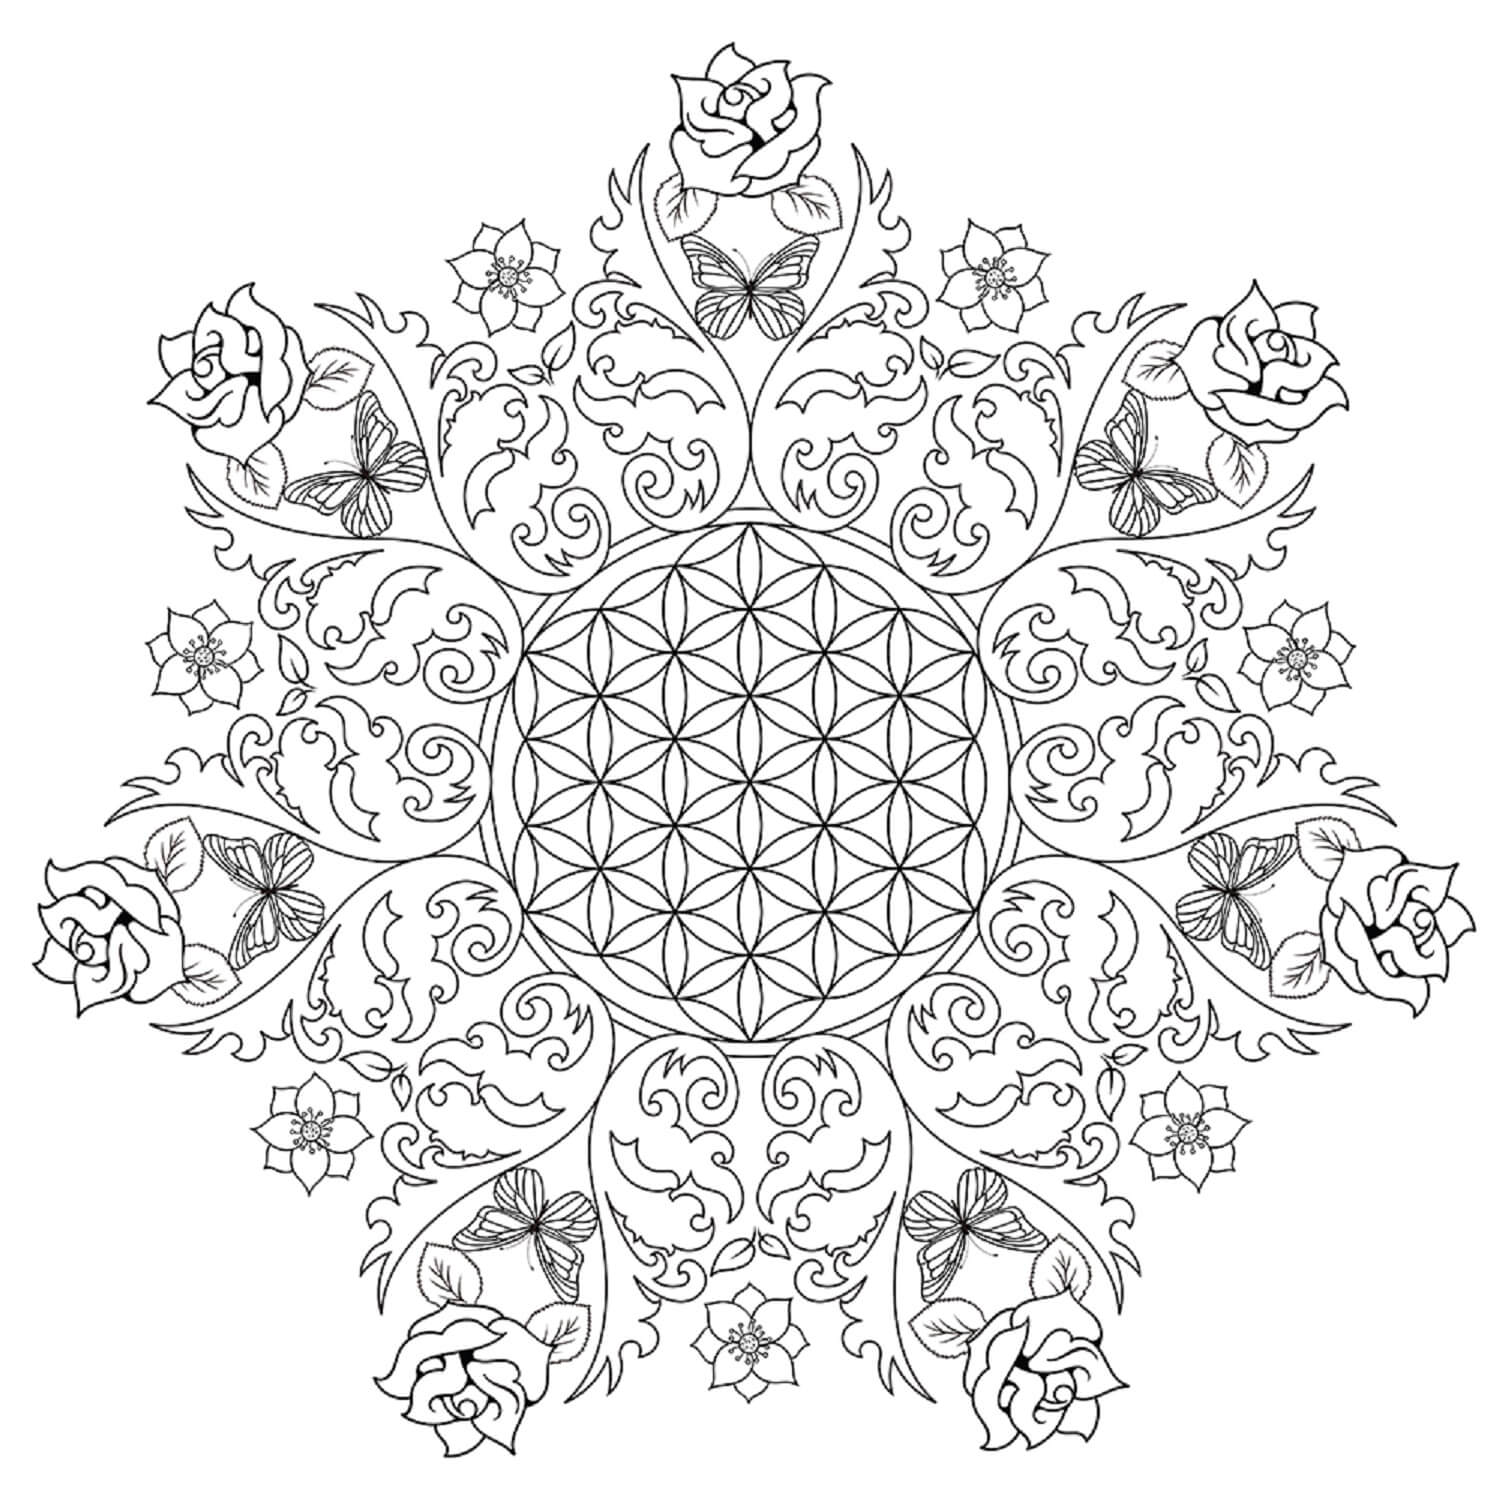 Mandala Rose Coloring Page - Sheet 2 Mandalas